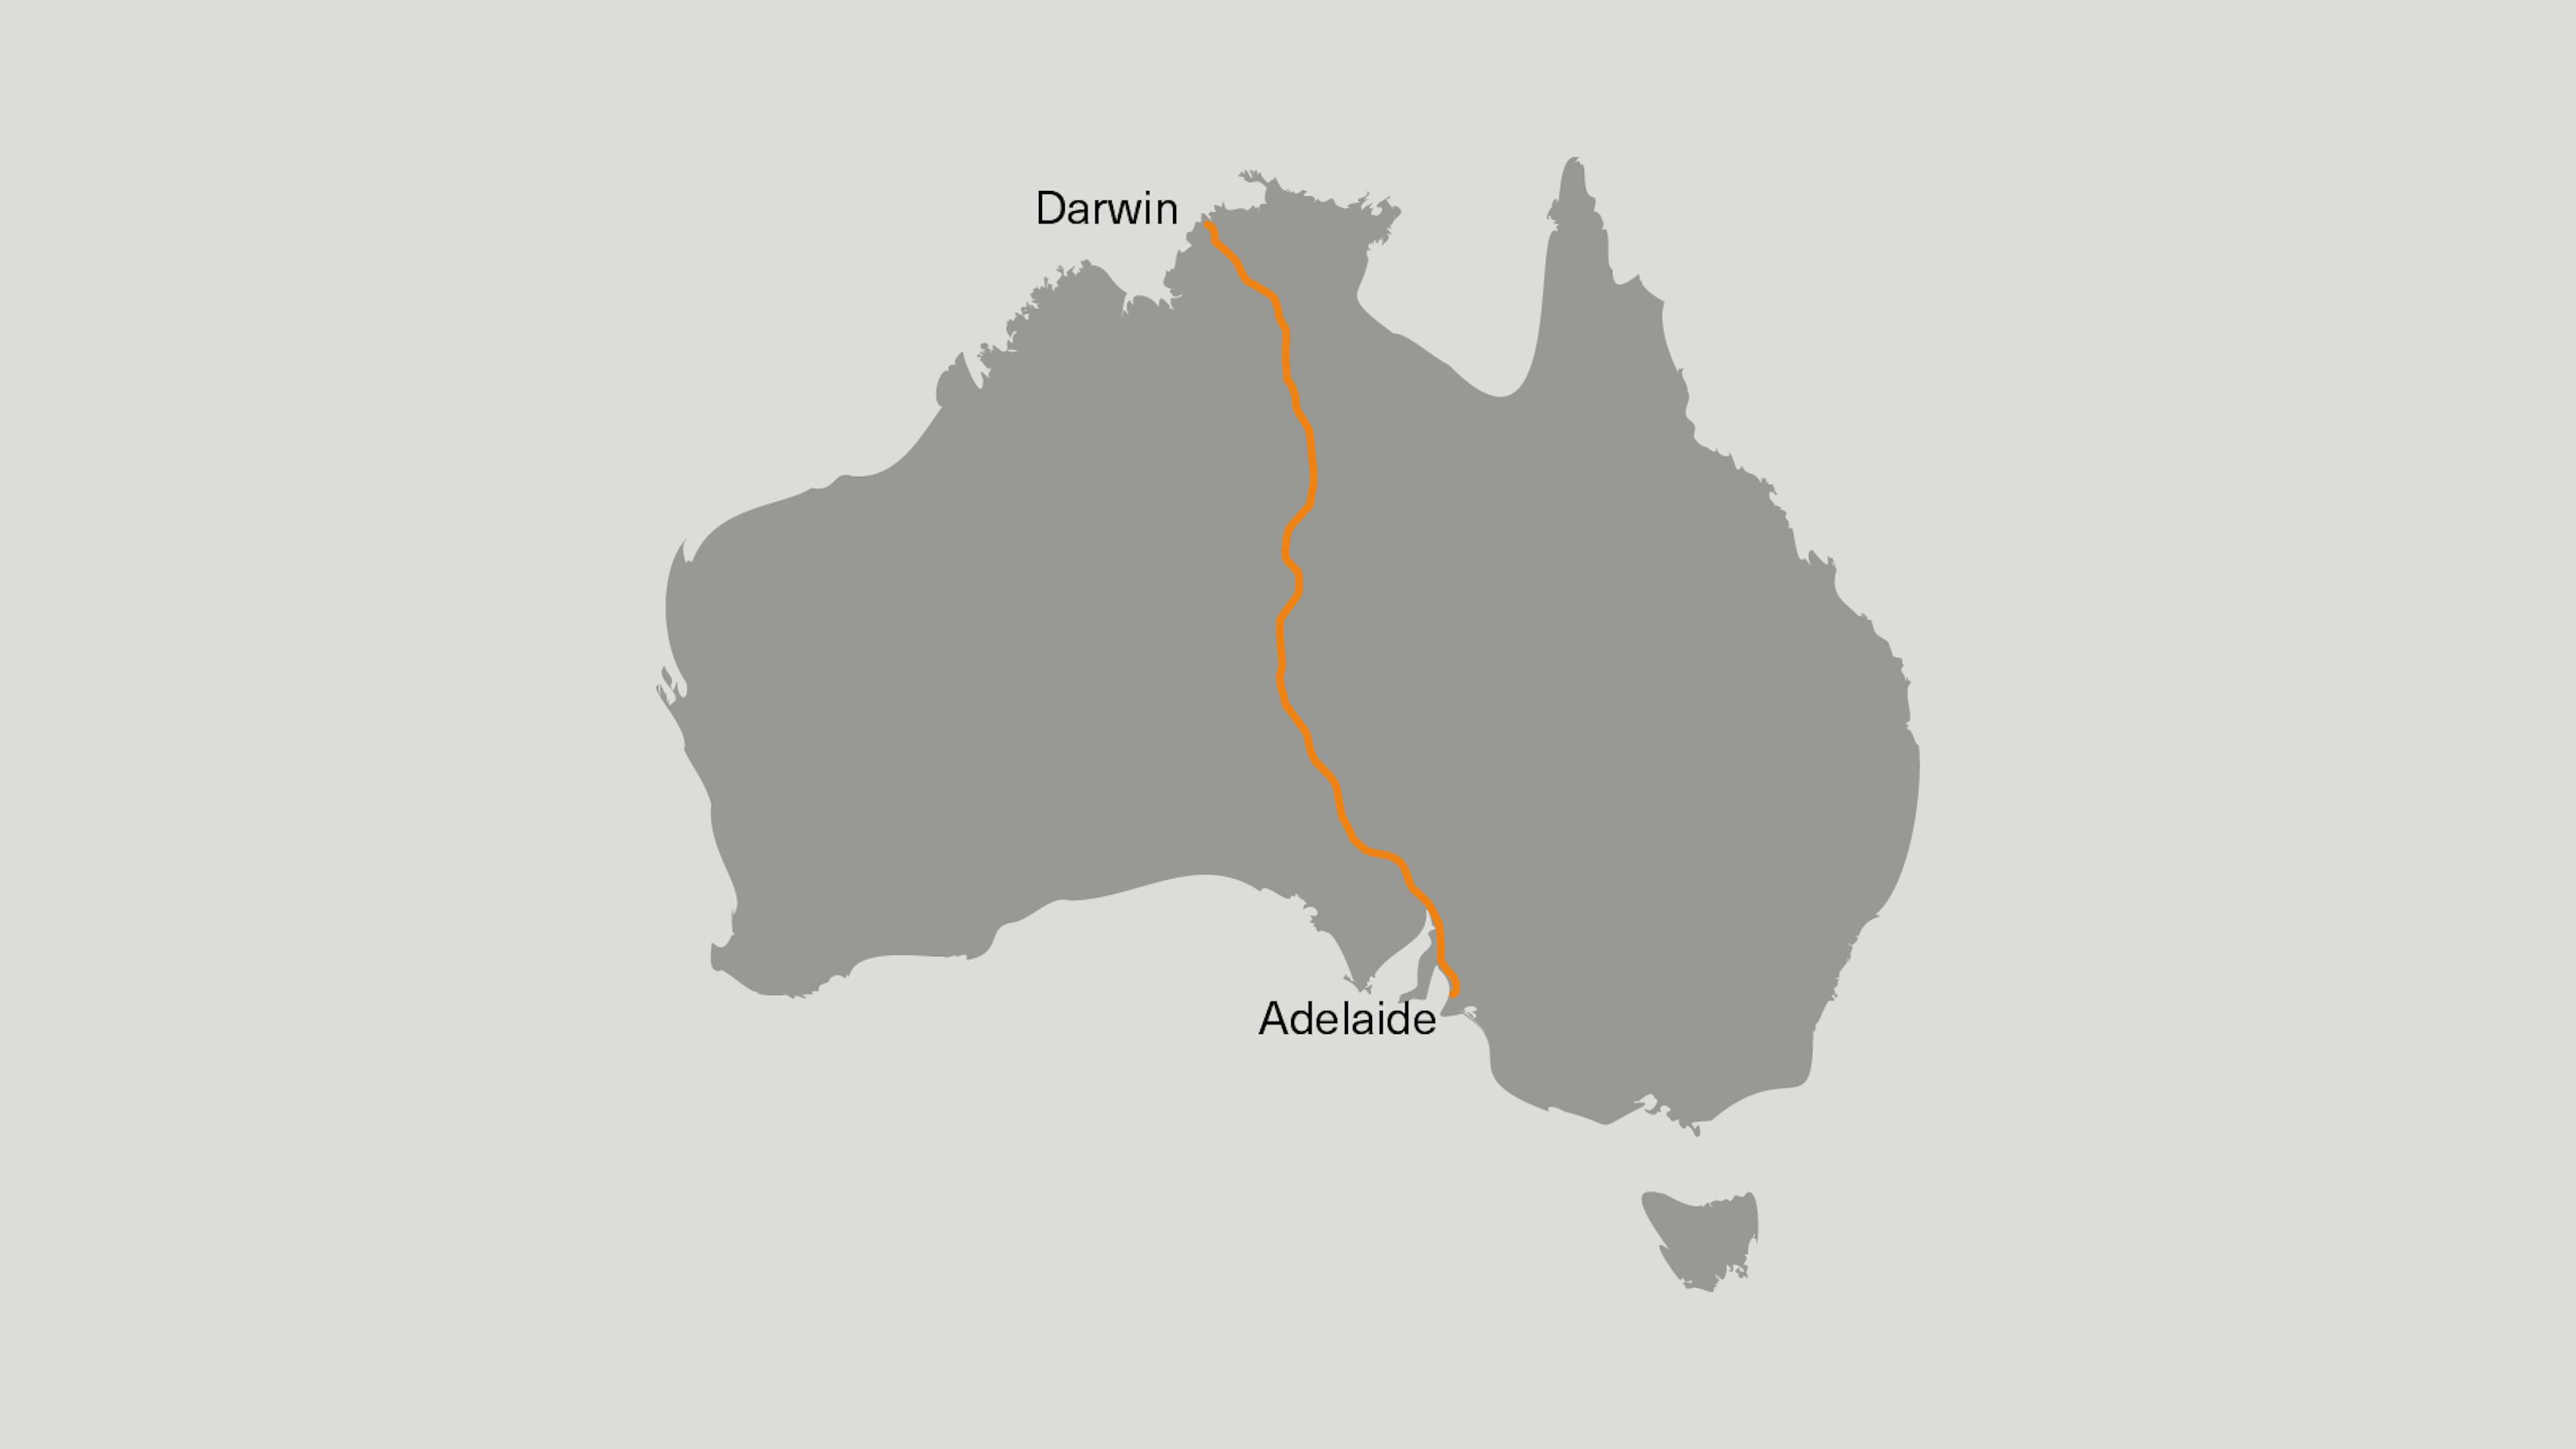 Route of the Bridgestone World Solar Challenge, from Darwin to Adelaide